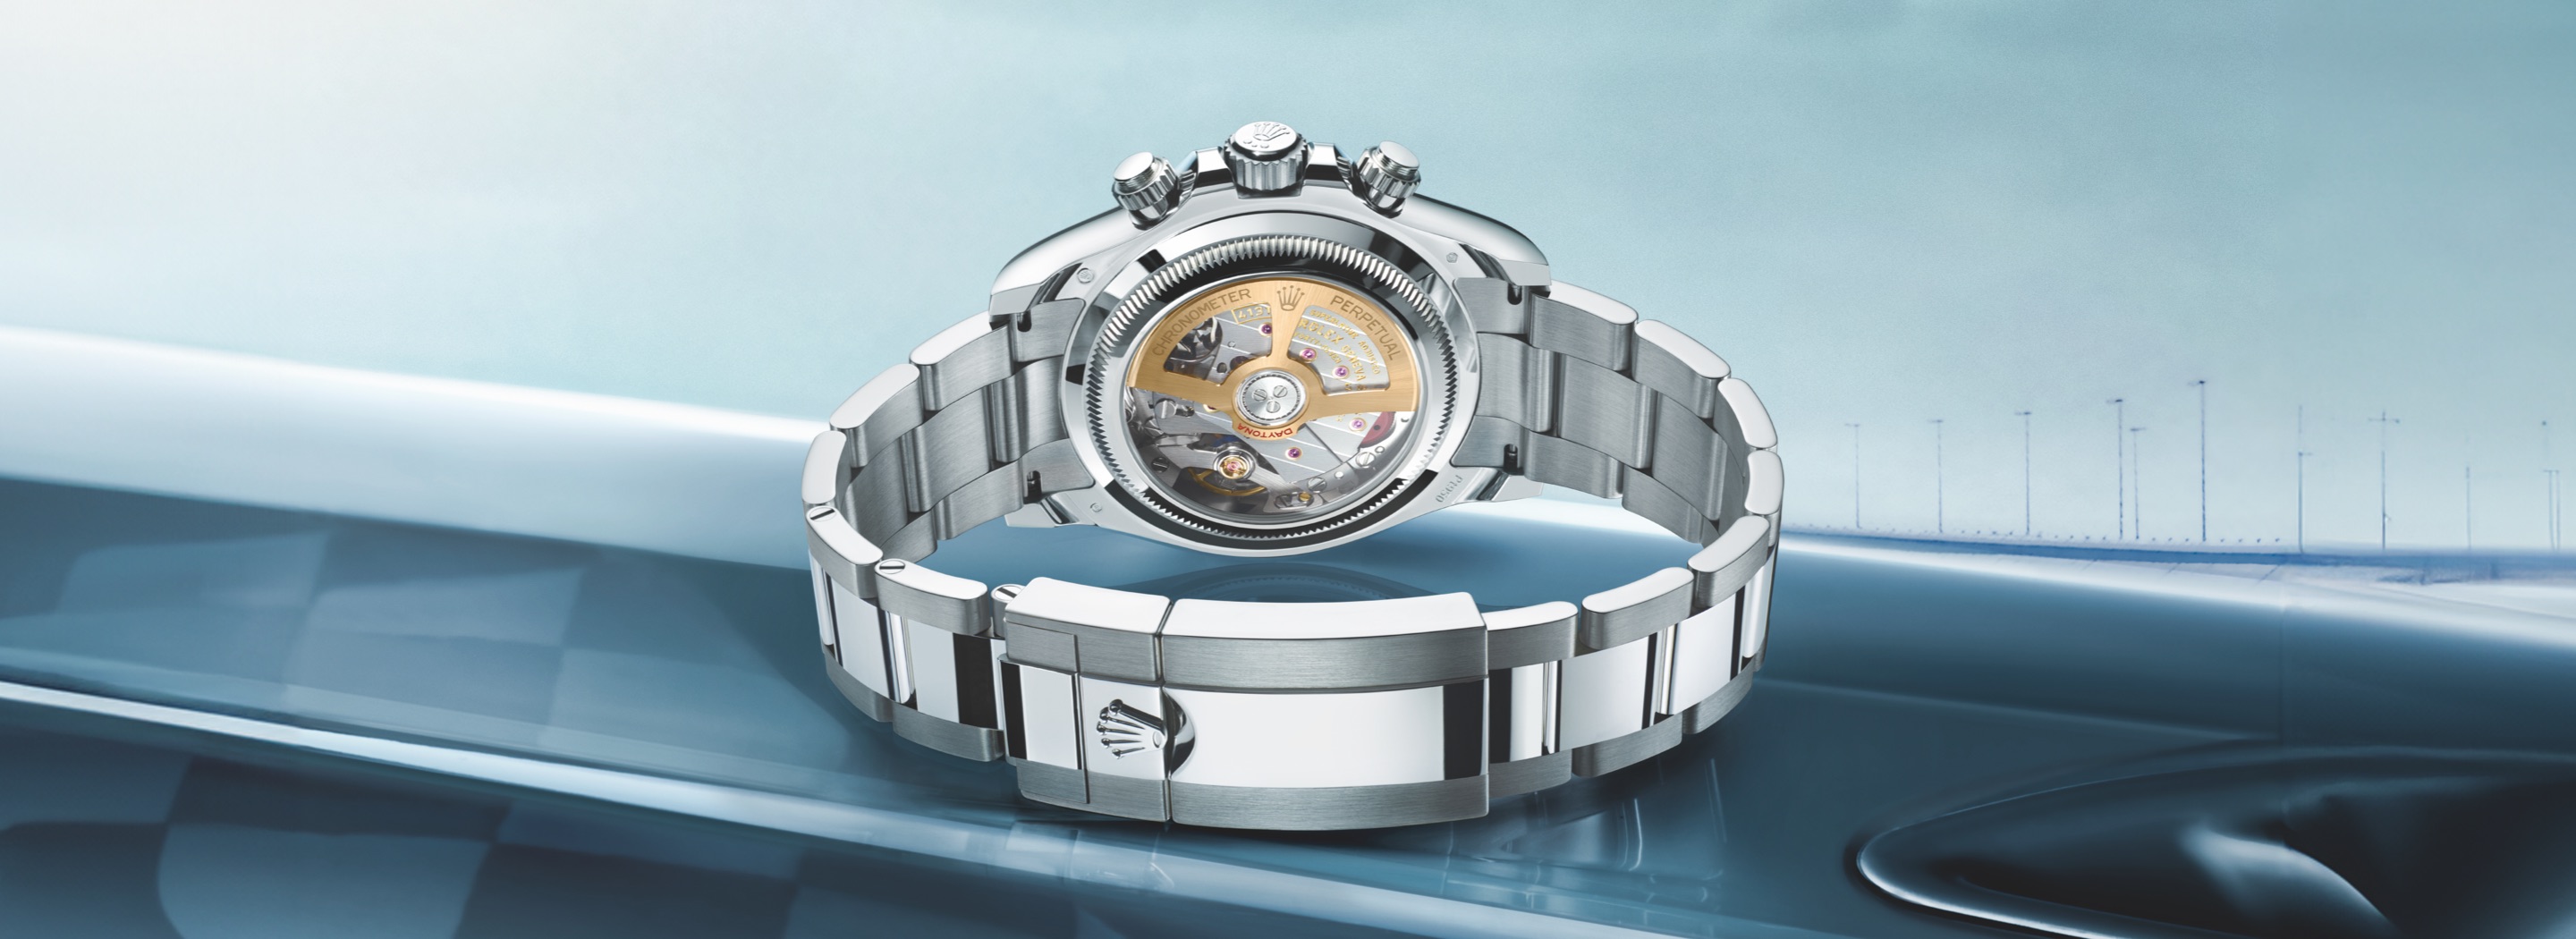 Cosmograph Daytona Watches